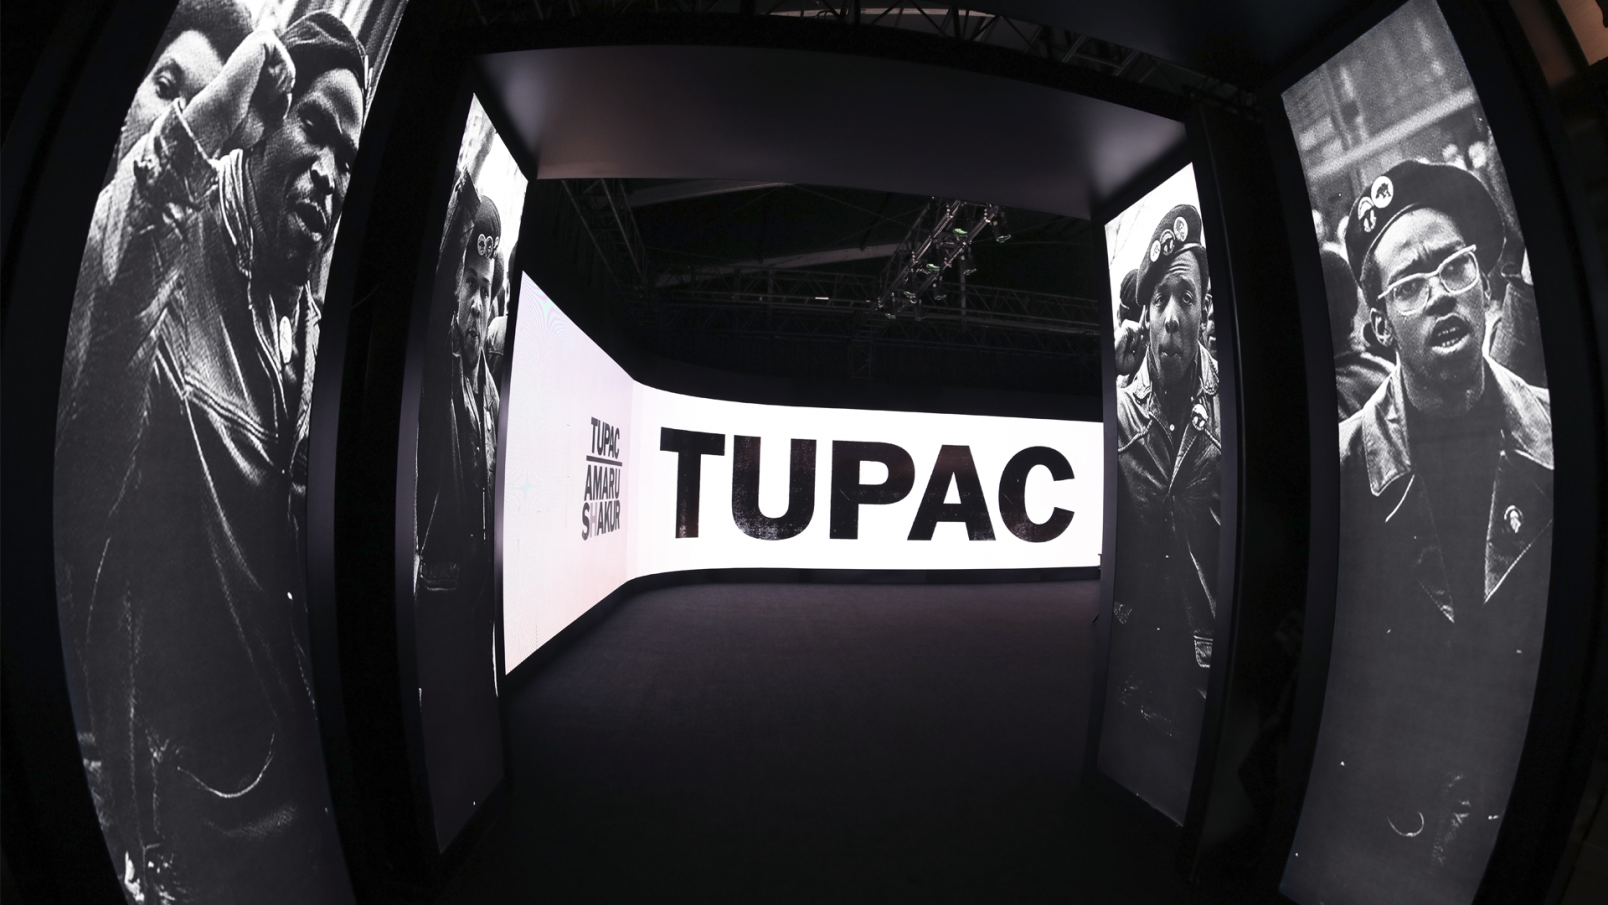 Tupac exhibition image